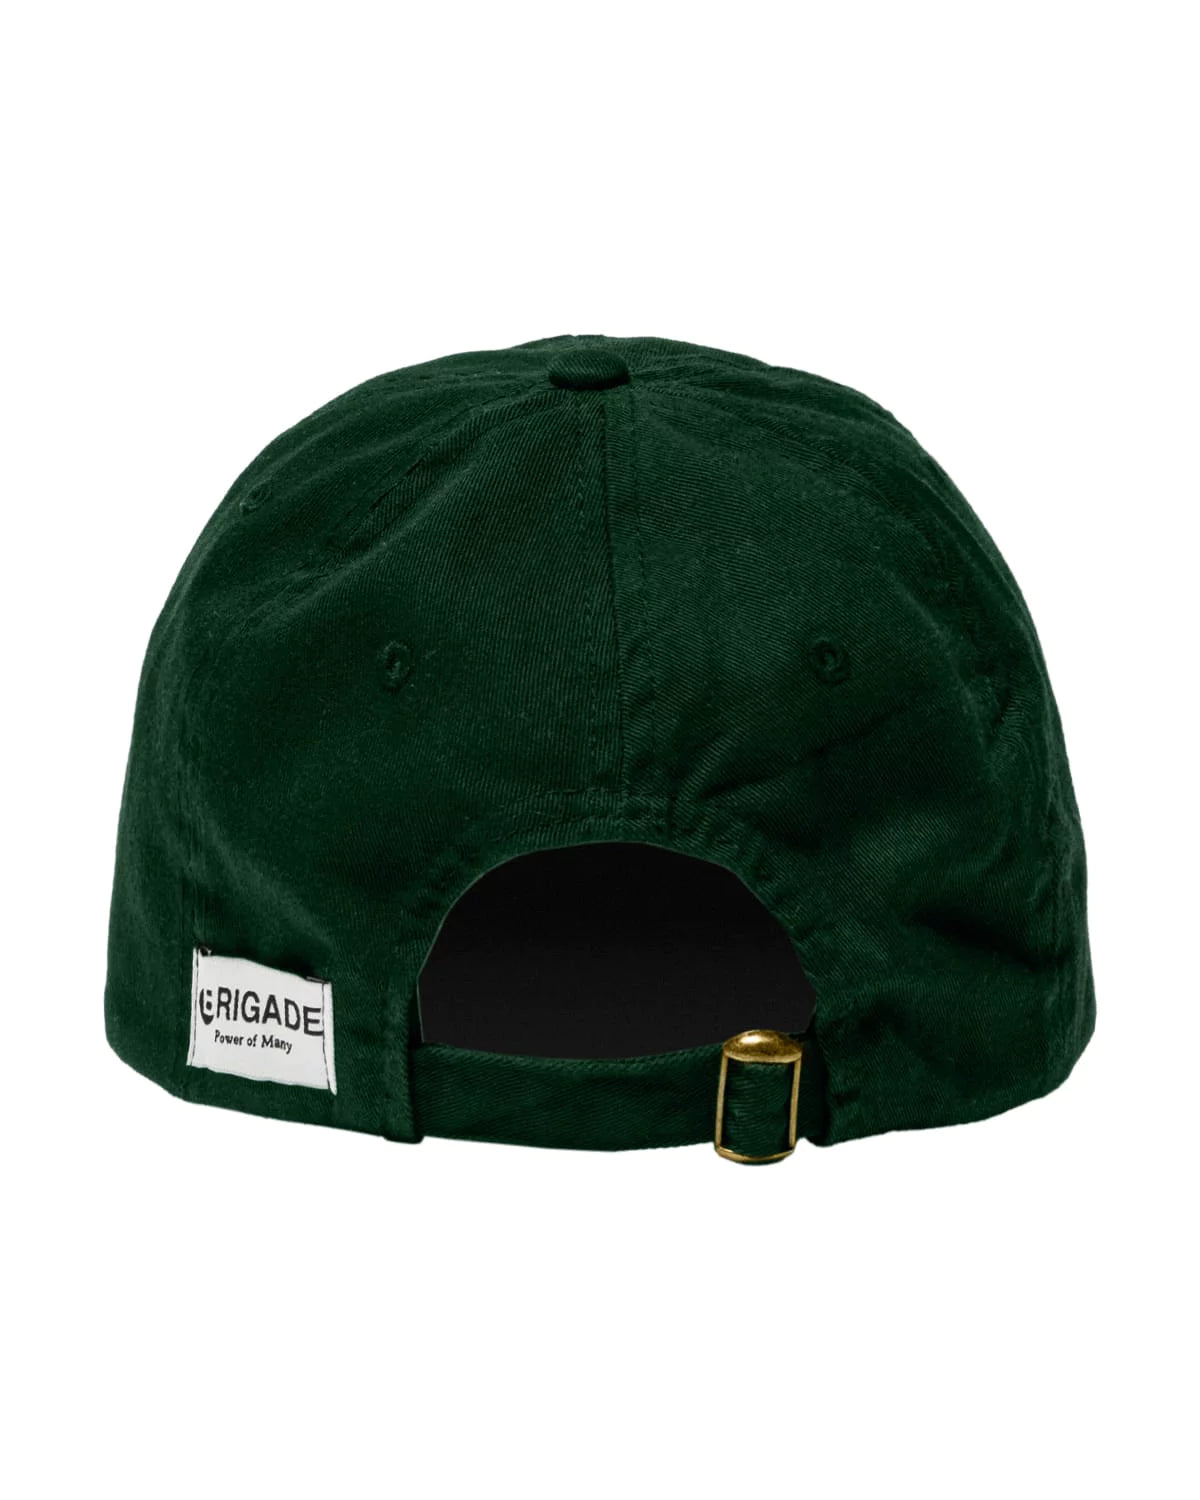 Brigade - BNY Worldwide Cap (Green)